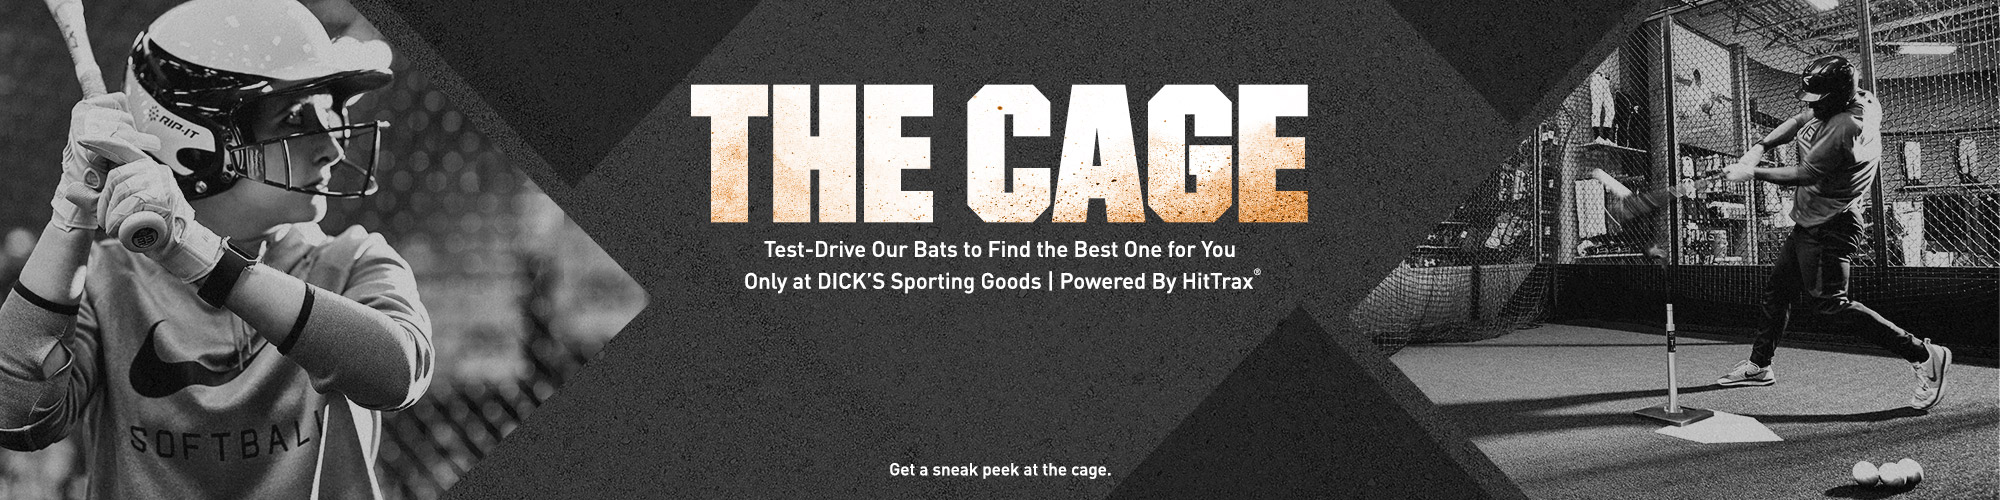 hittrax batting cage cost